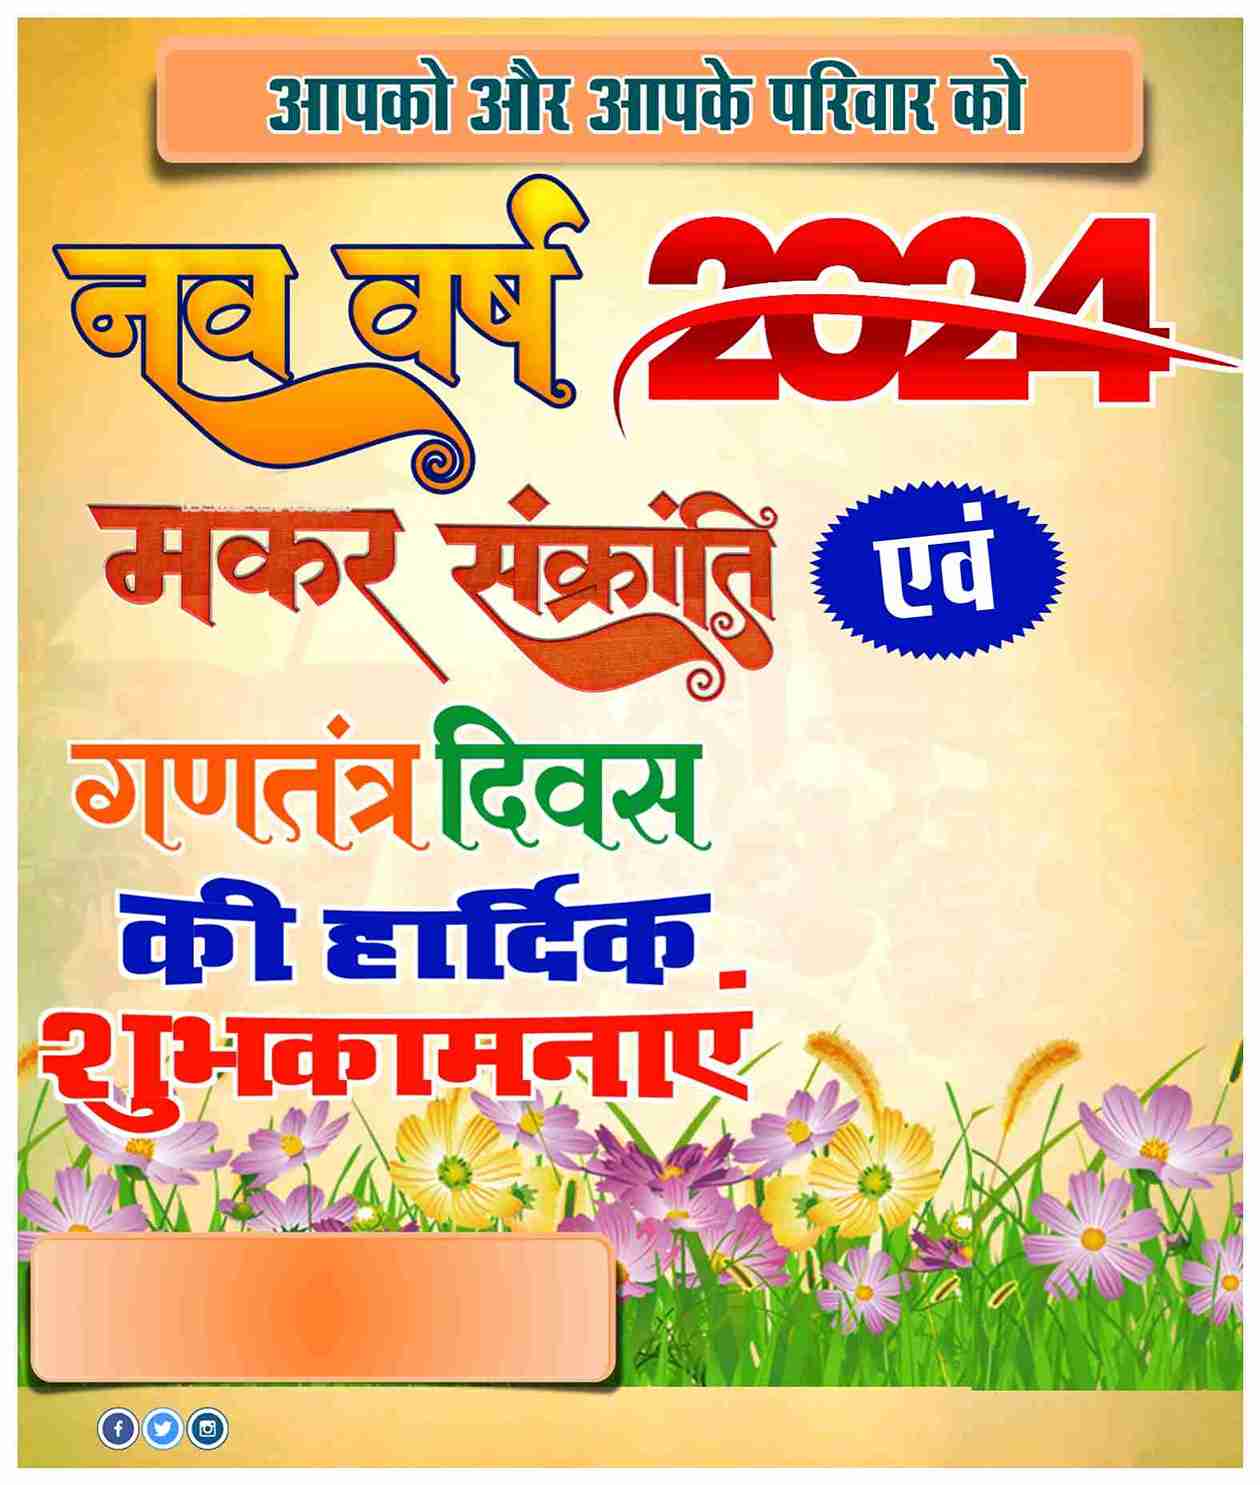 New Year 2024, Makar Sankranti and Republic Day wish Banner in Hindi